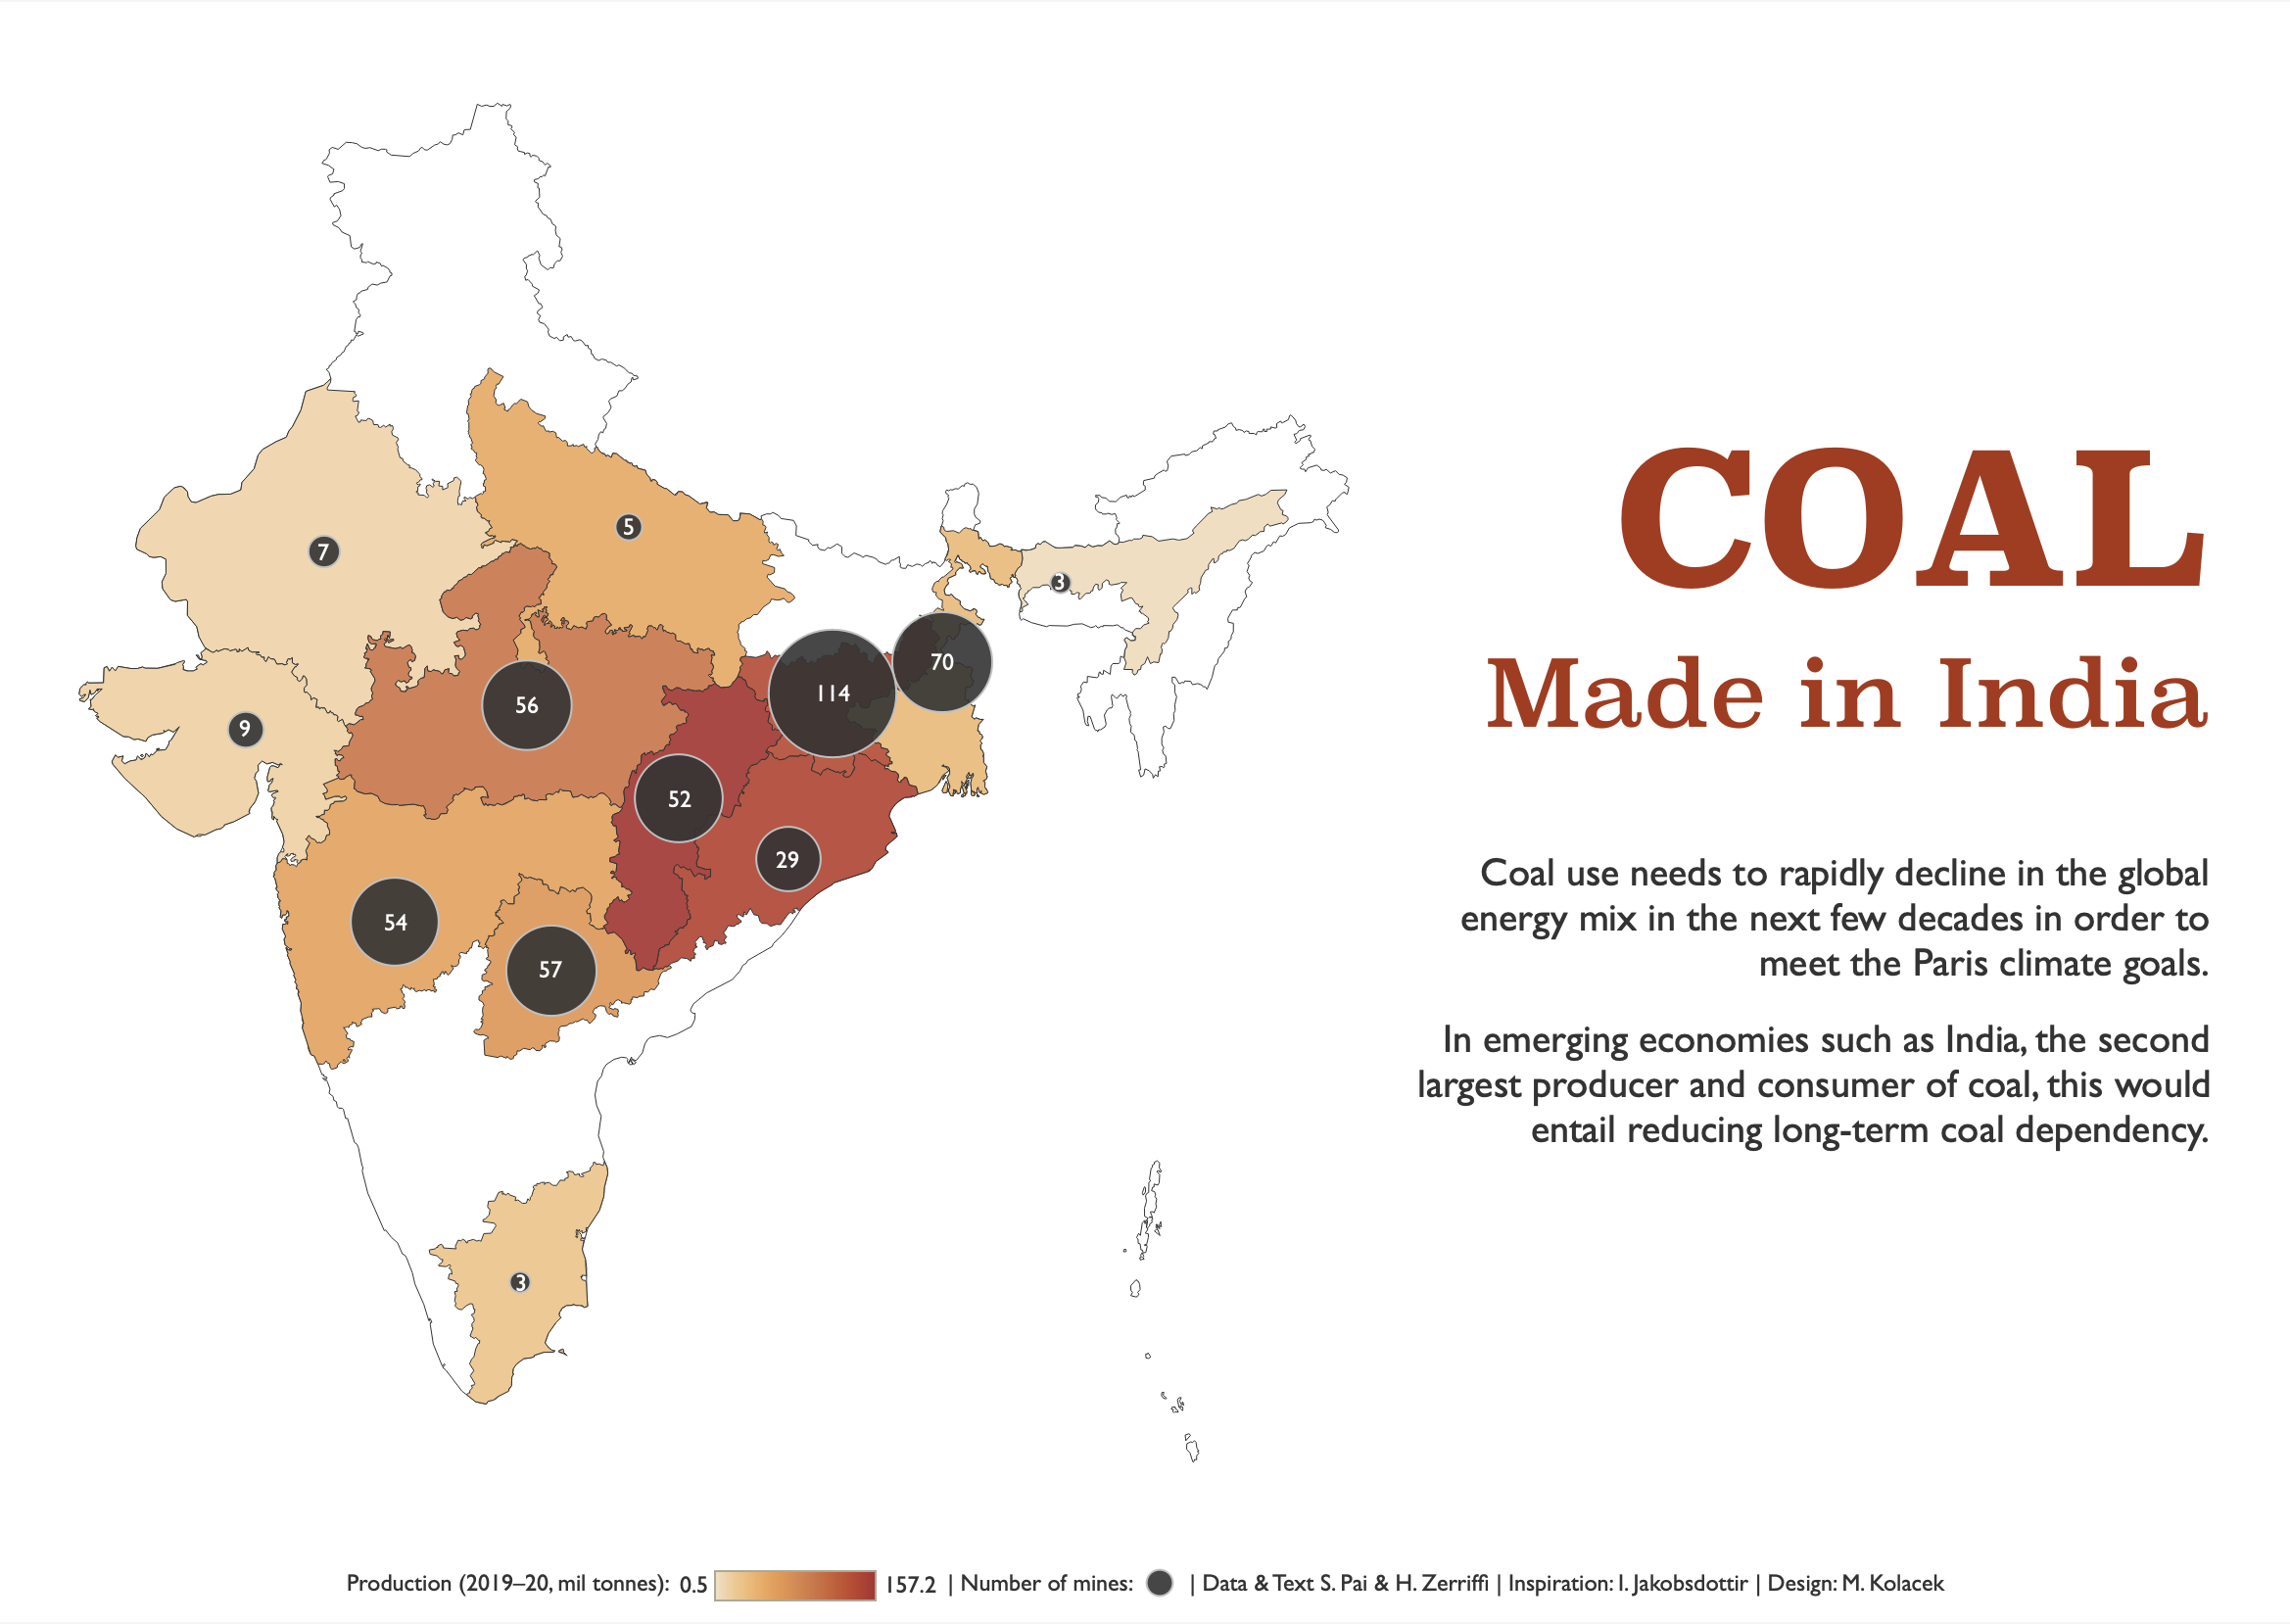 Coal, Made in India